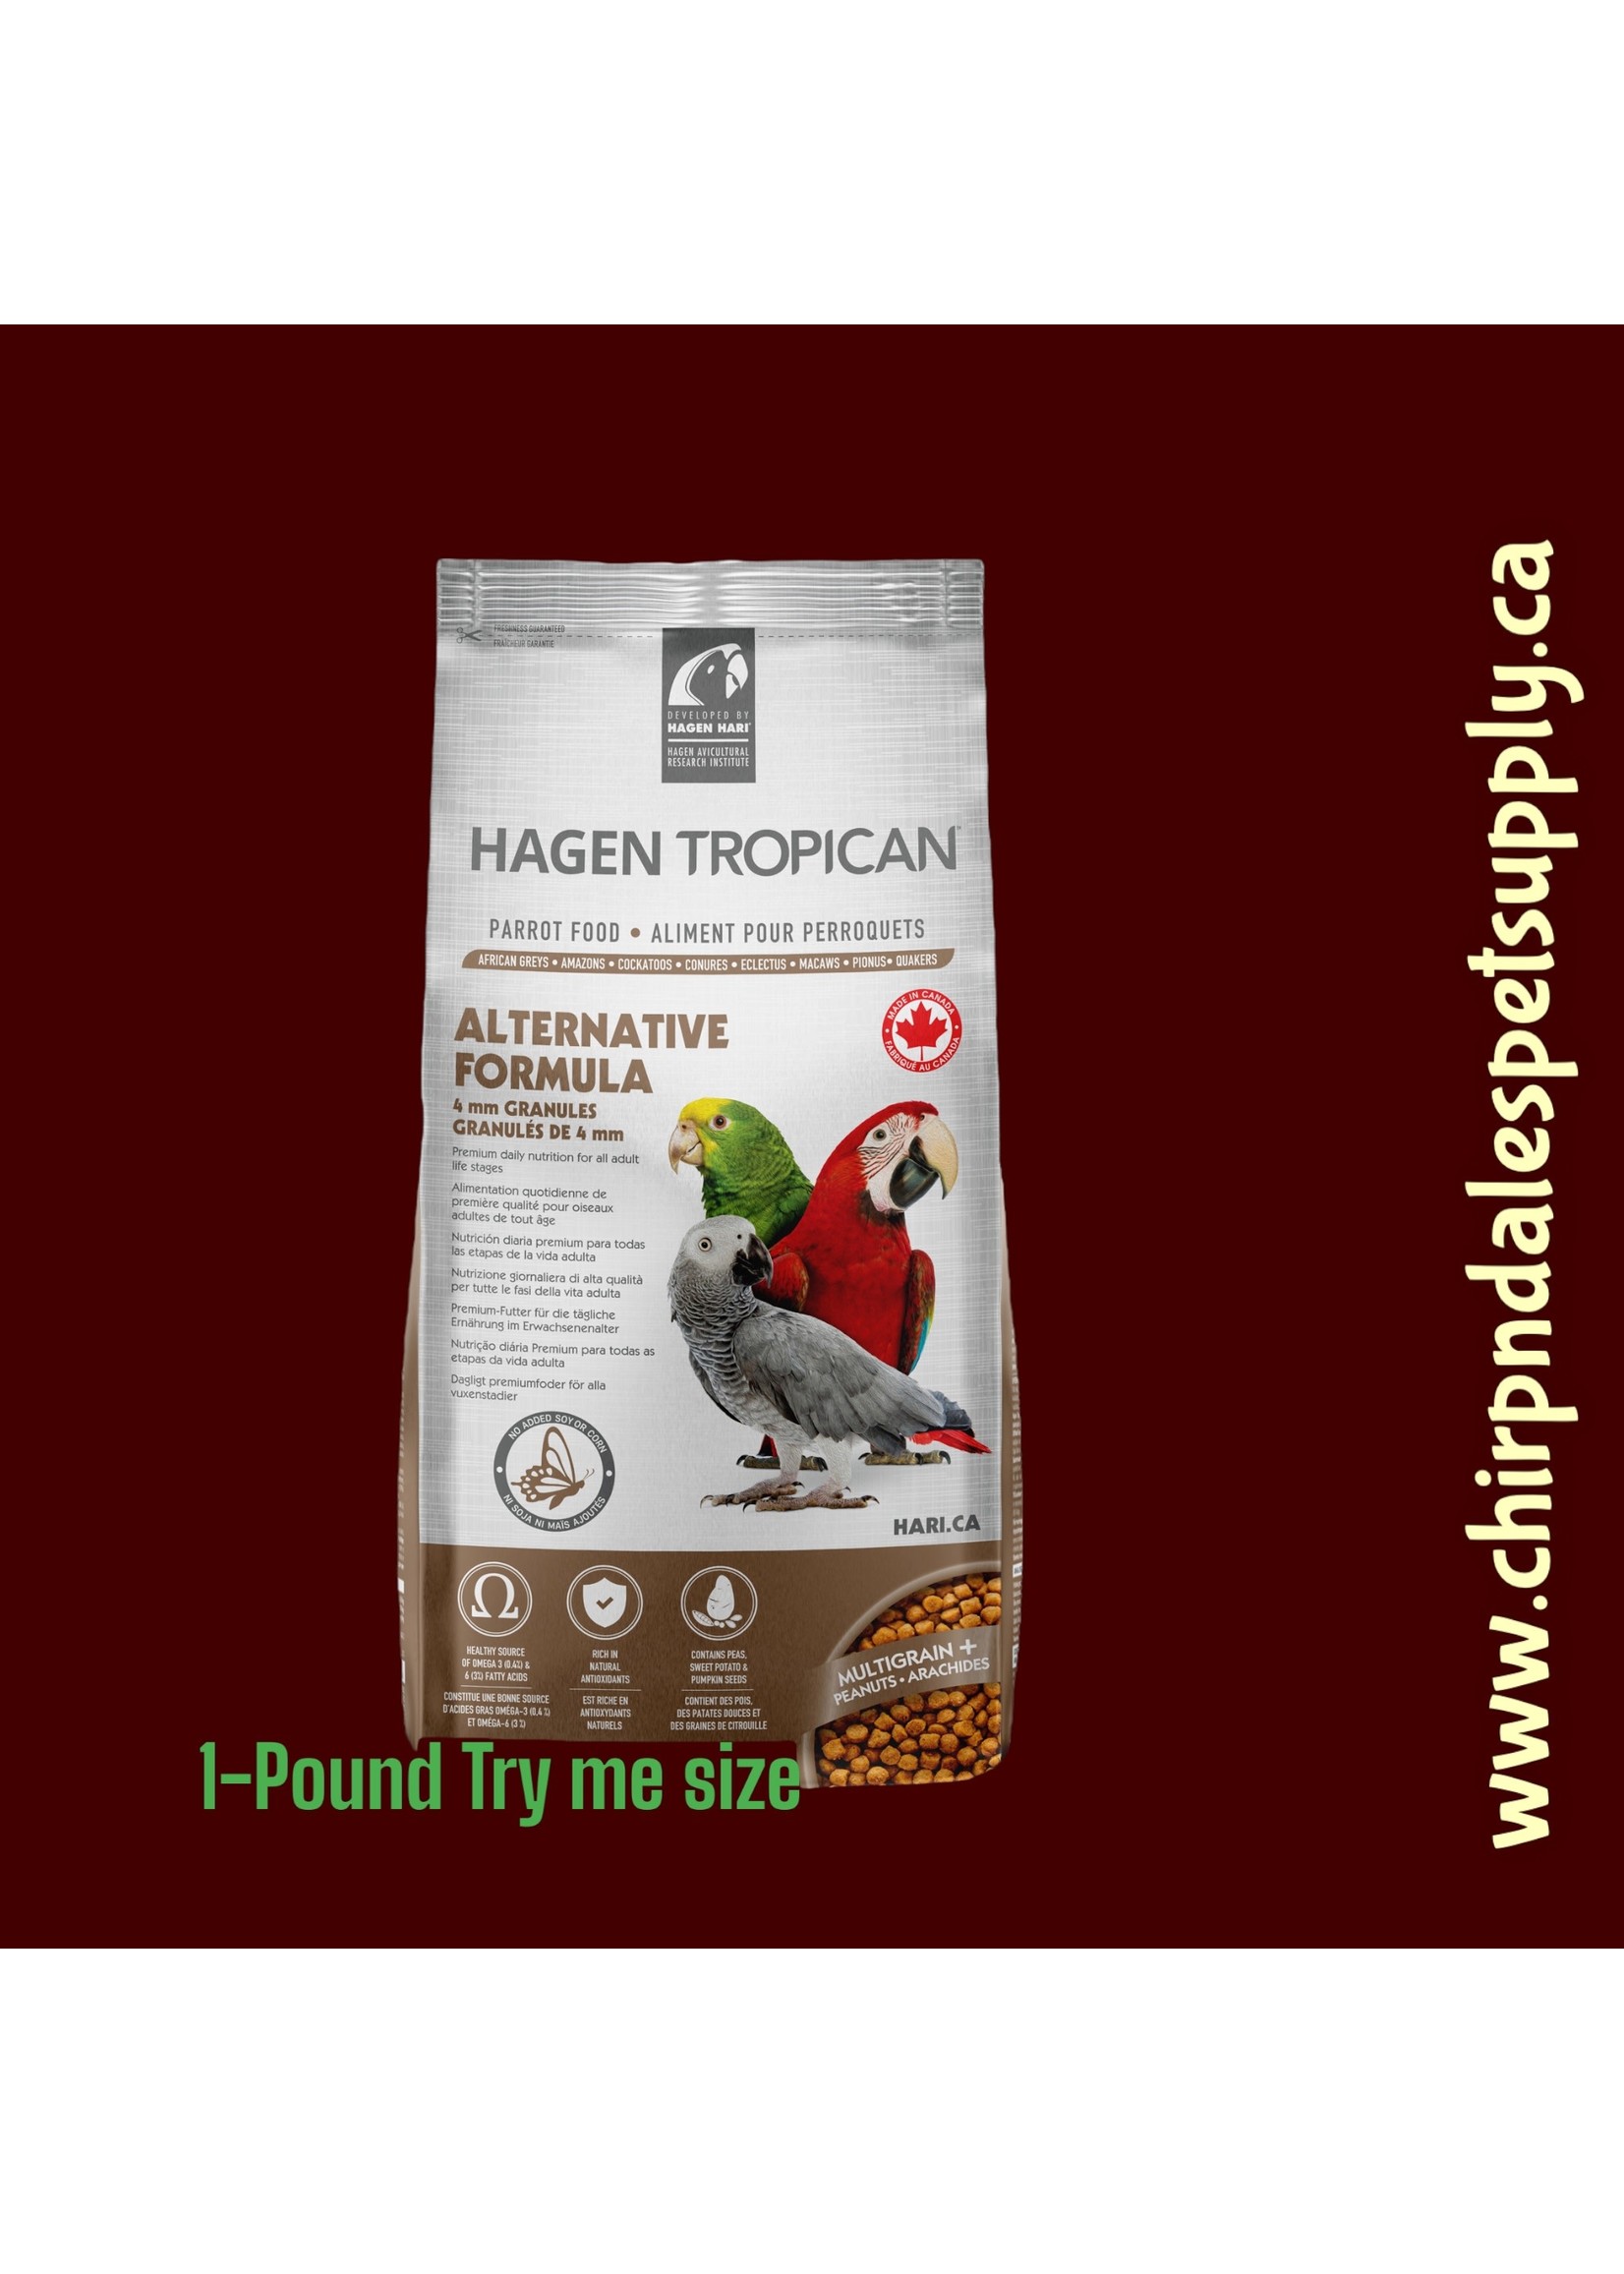 Hagen Tropican Alternative Formula for Parrots - 1 Lb Try Me Size (553)